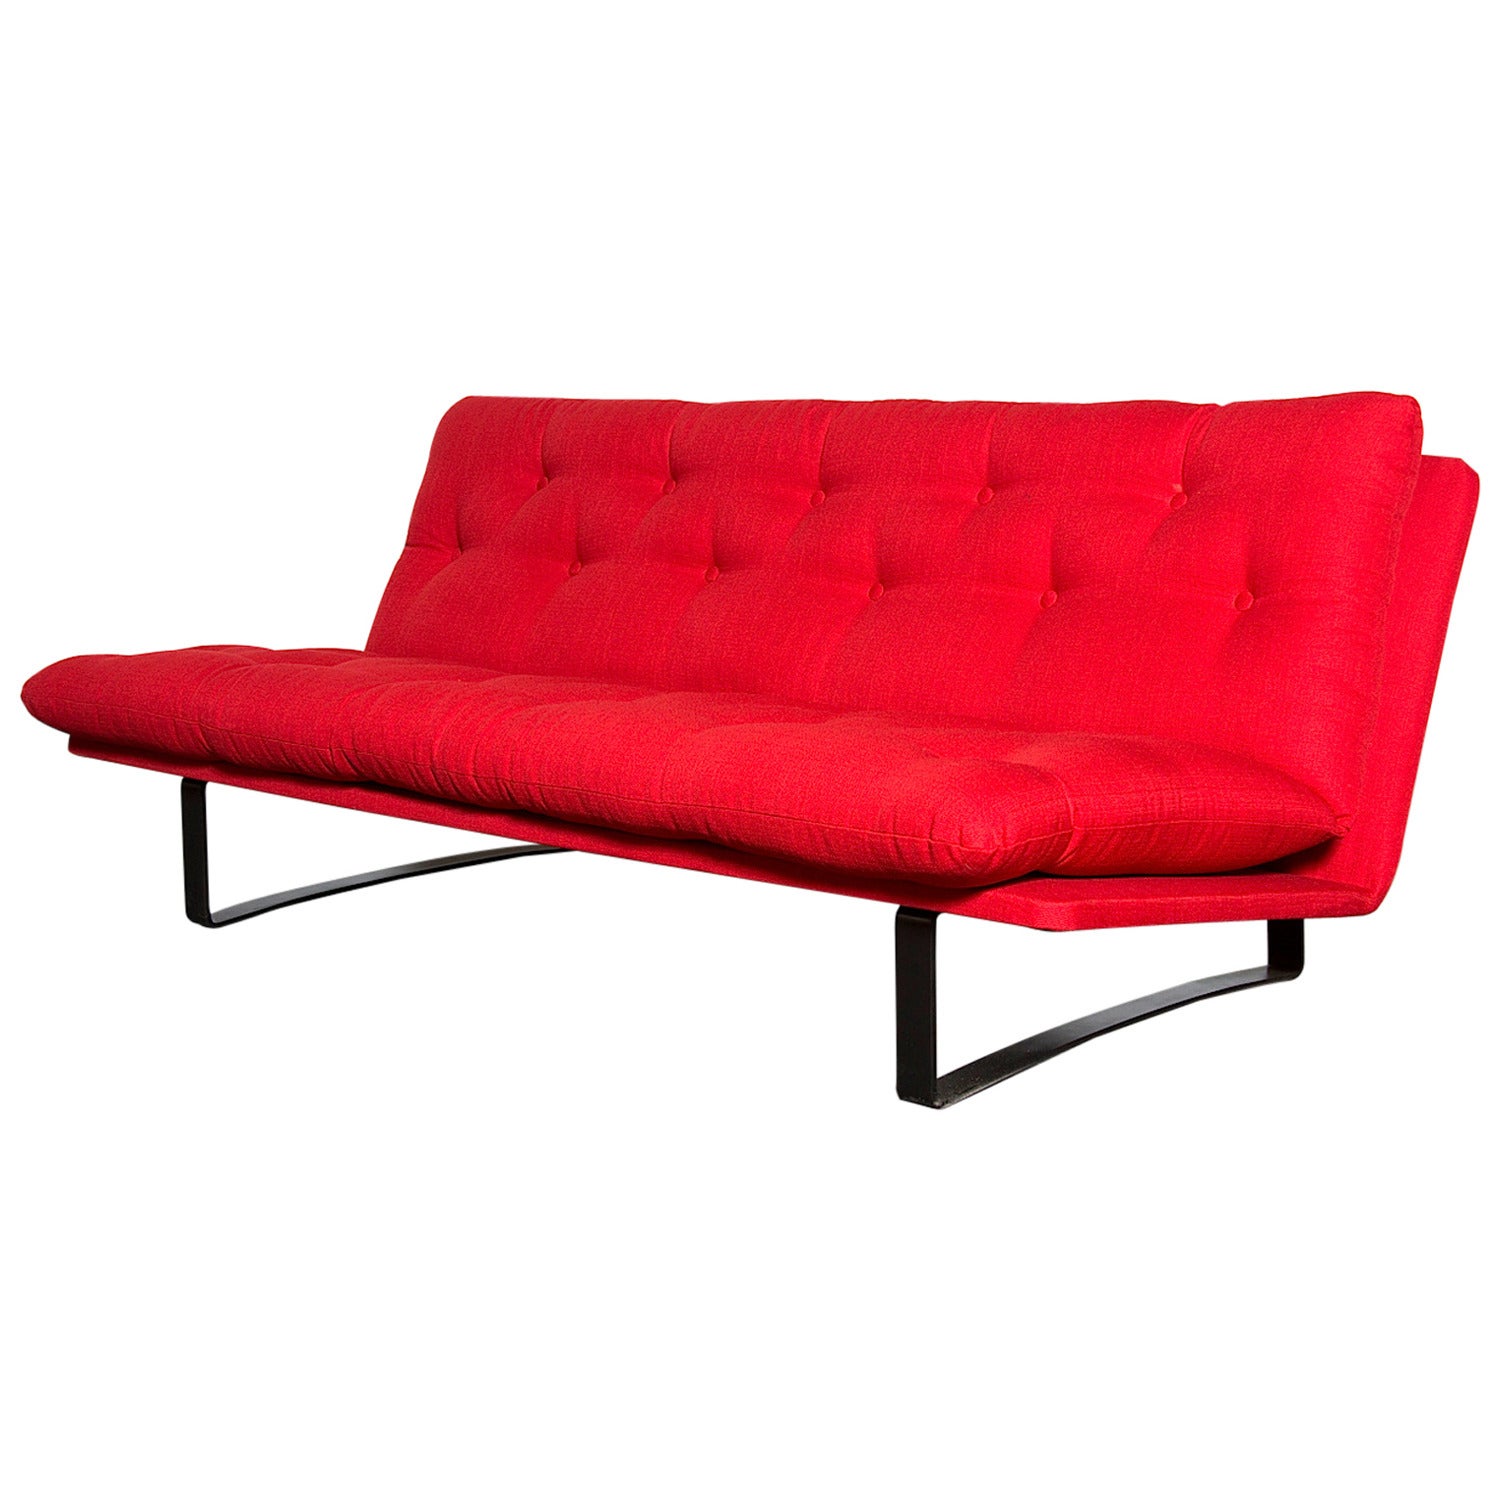 Kho Liang le getuftetes rotes gepolstertes Sofa 'Modell 662' für Artifort mit schwarzem Rahmen